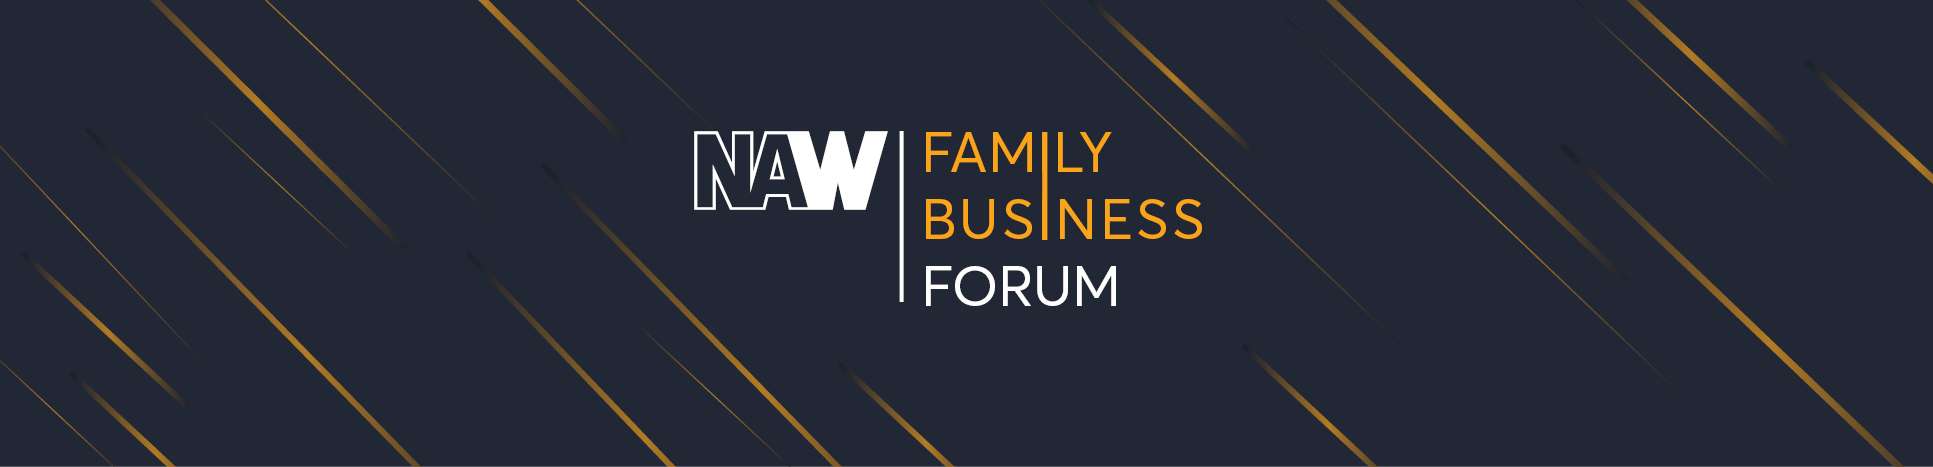 NAW Family Business Forum